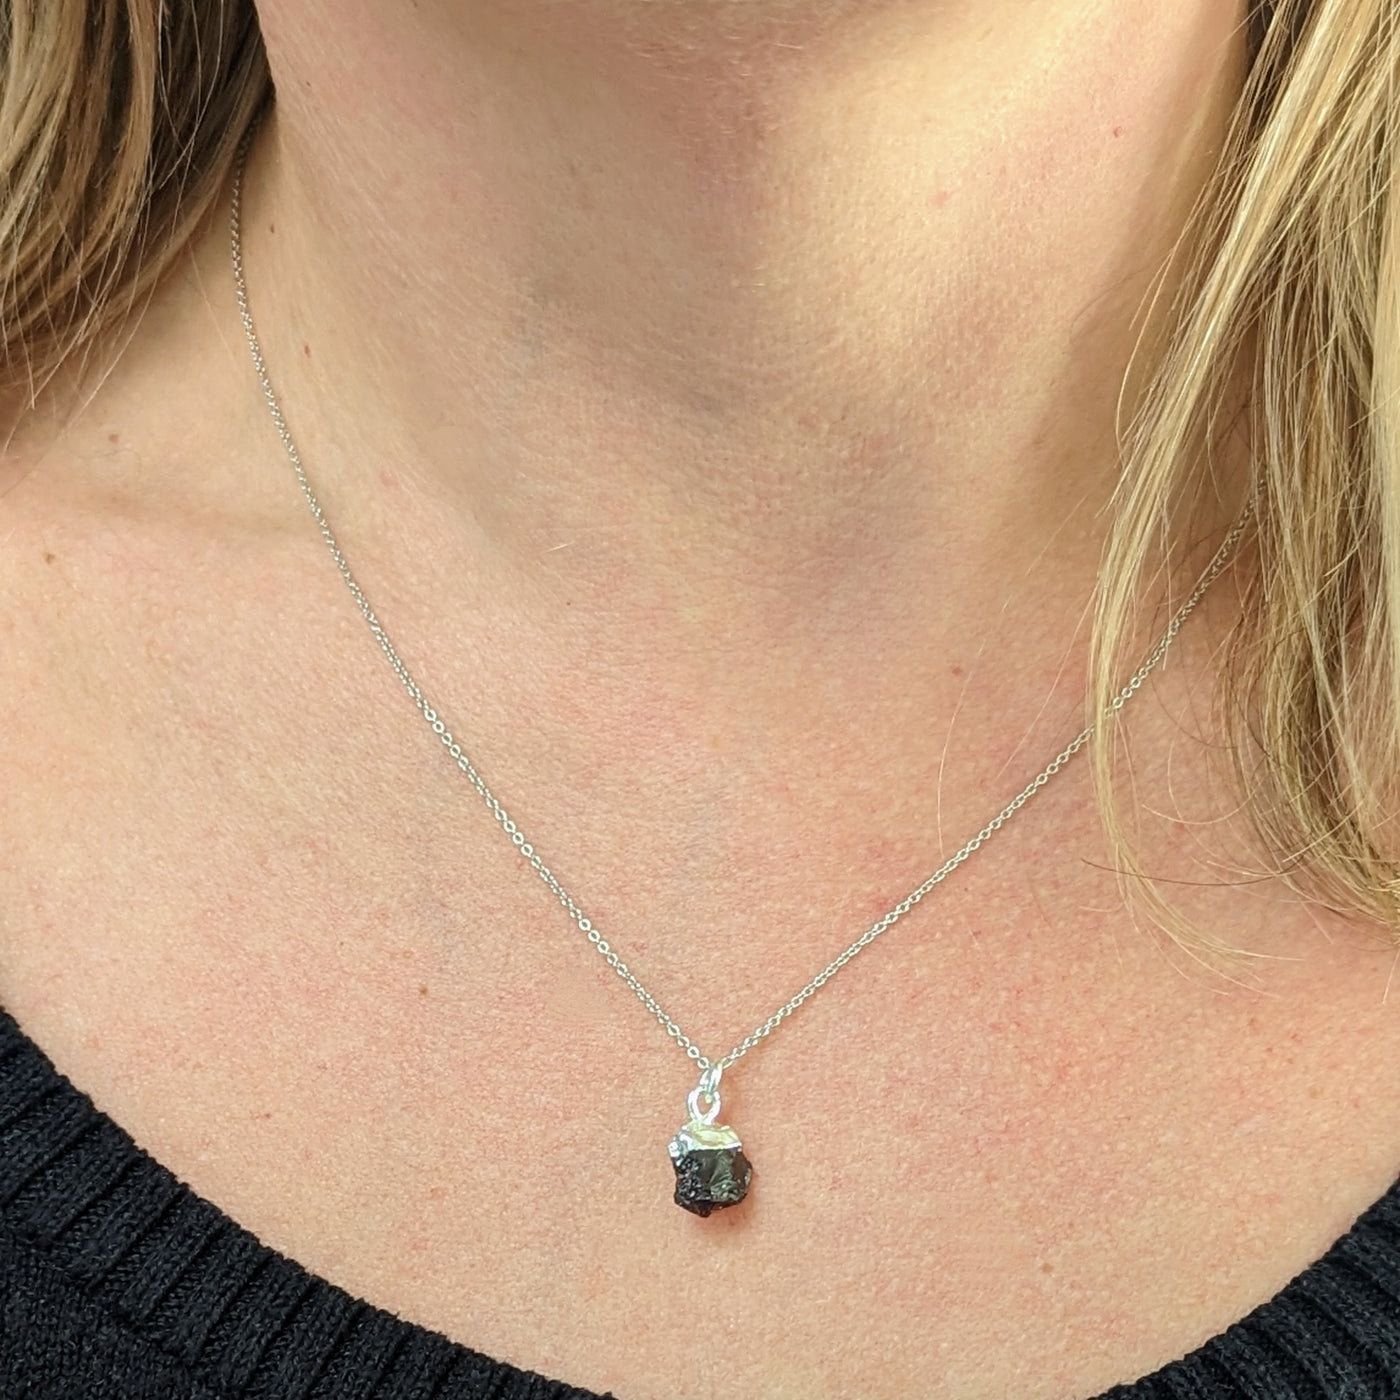 Garnet January birthstone necklace